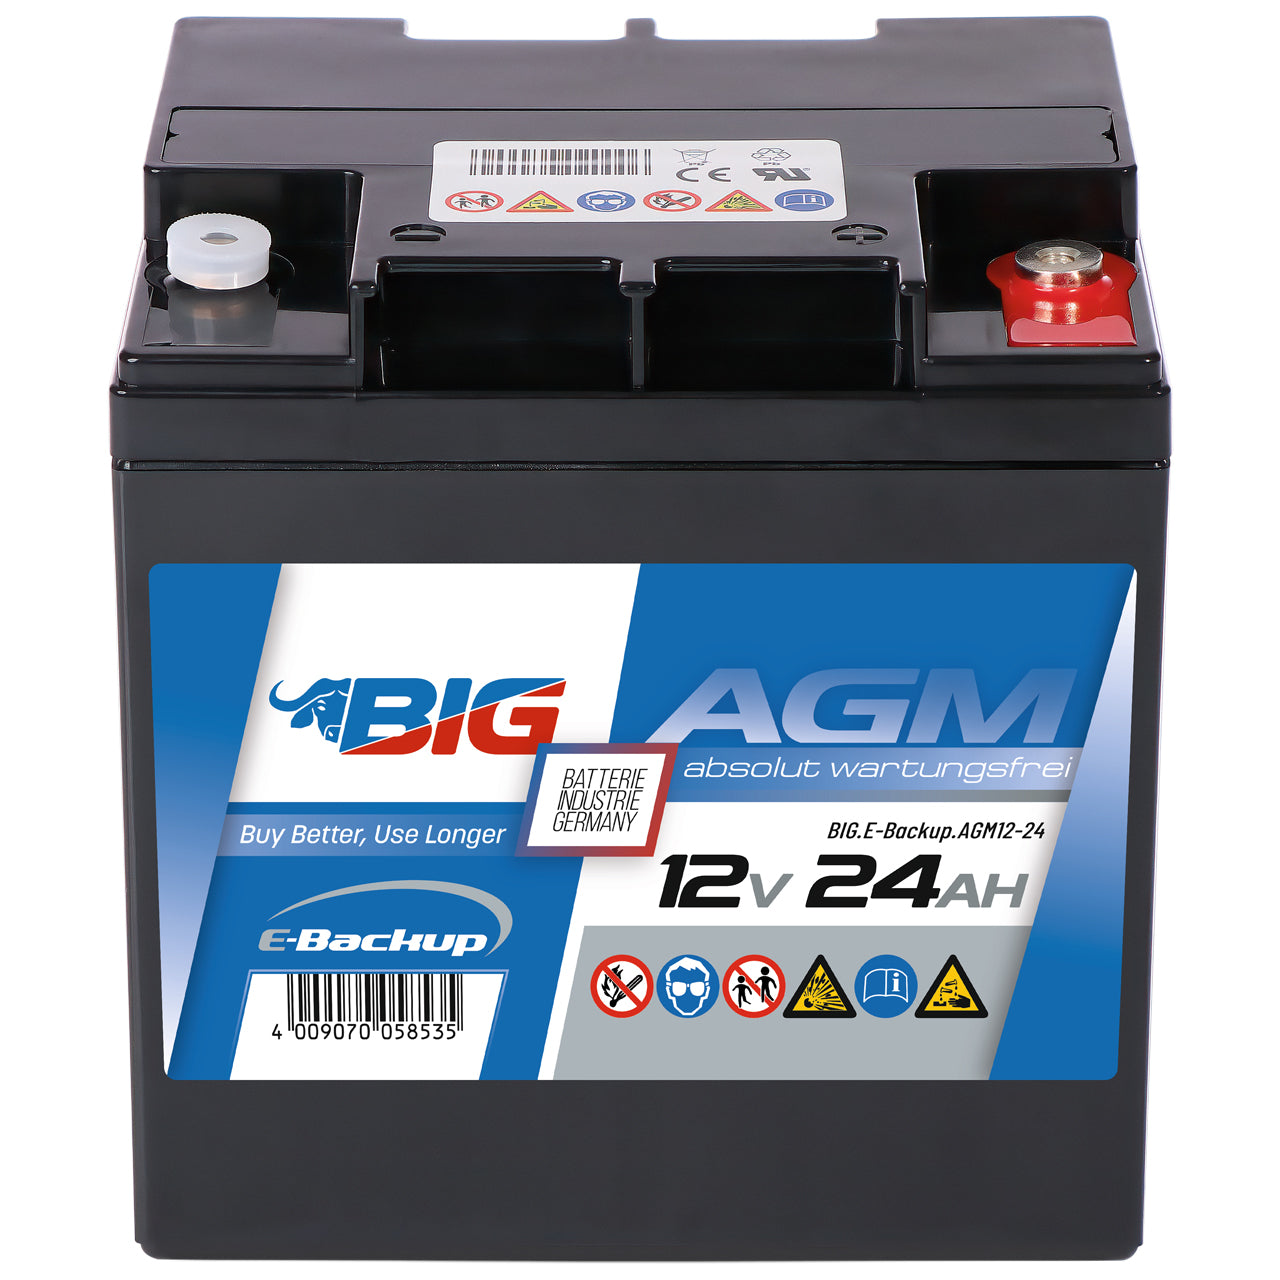 BIG E-Backup AGM 12V 24Ah